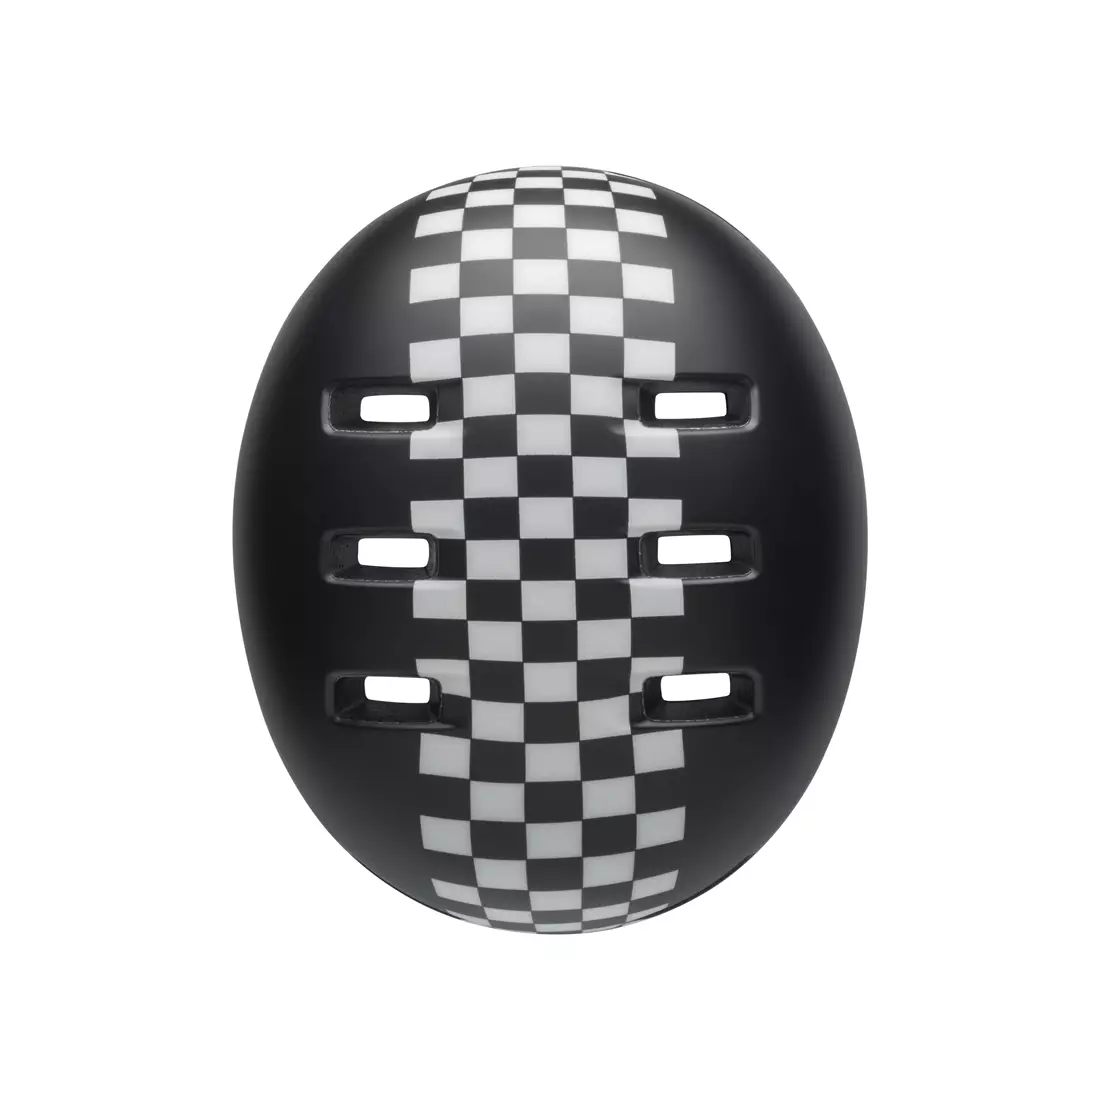 BELL LIL RIPPER Dětská cyklistická helma, checkers matte black white